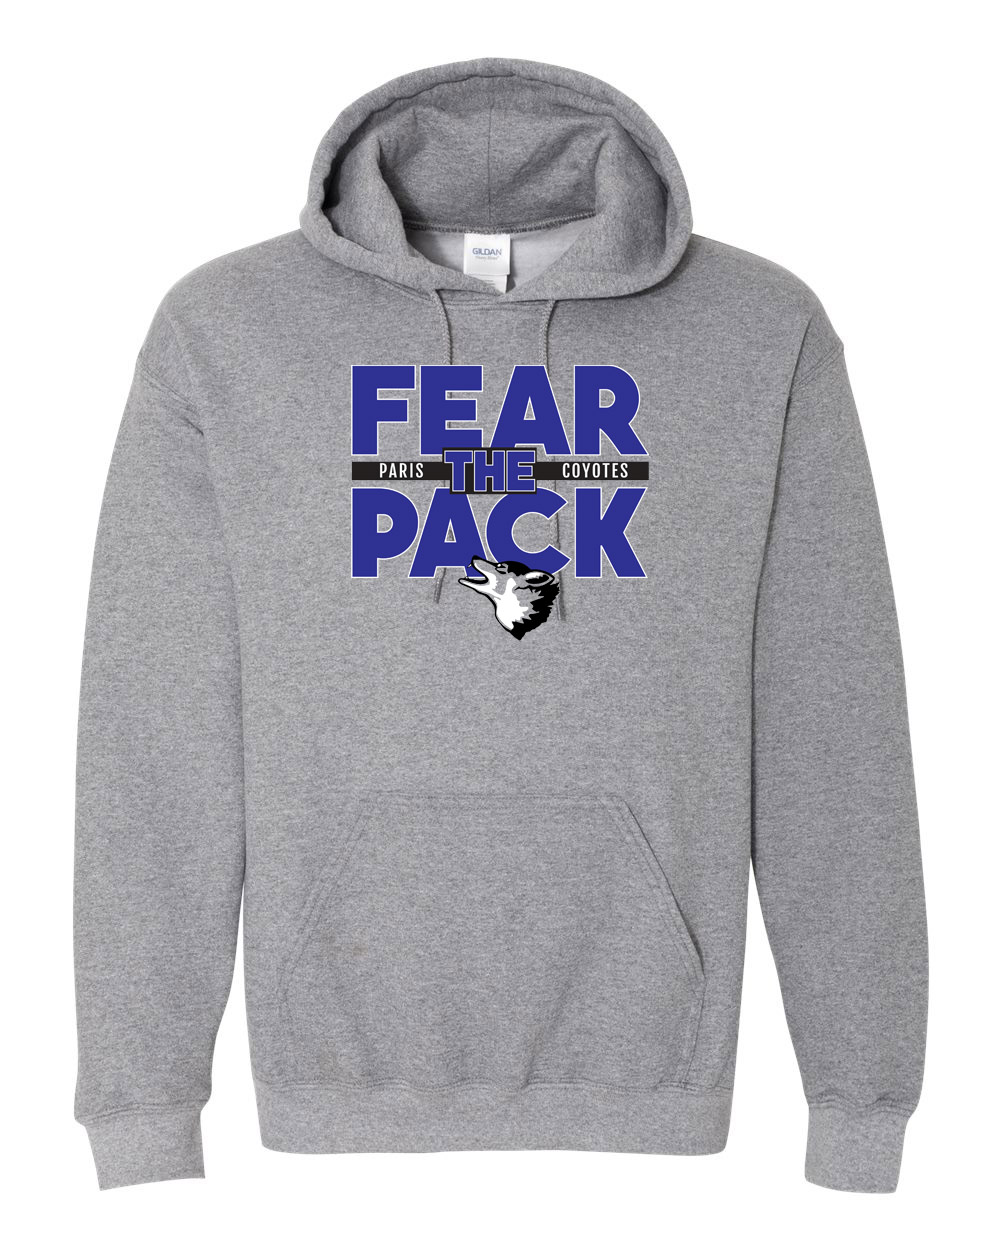 Fear the Pack Hoodie